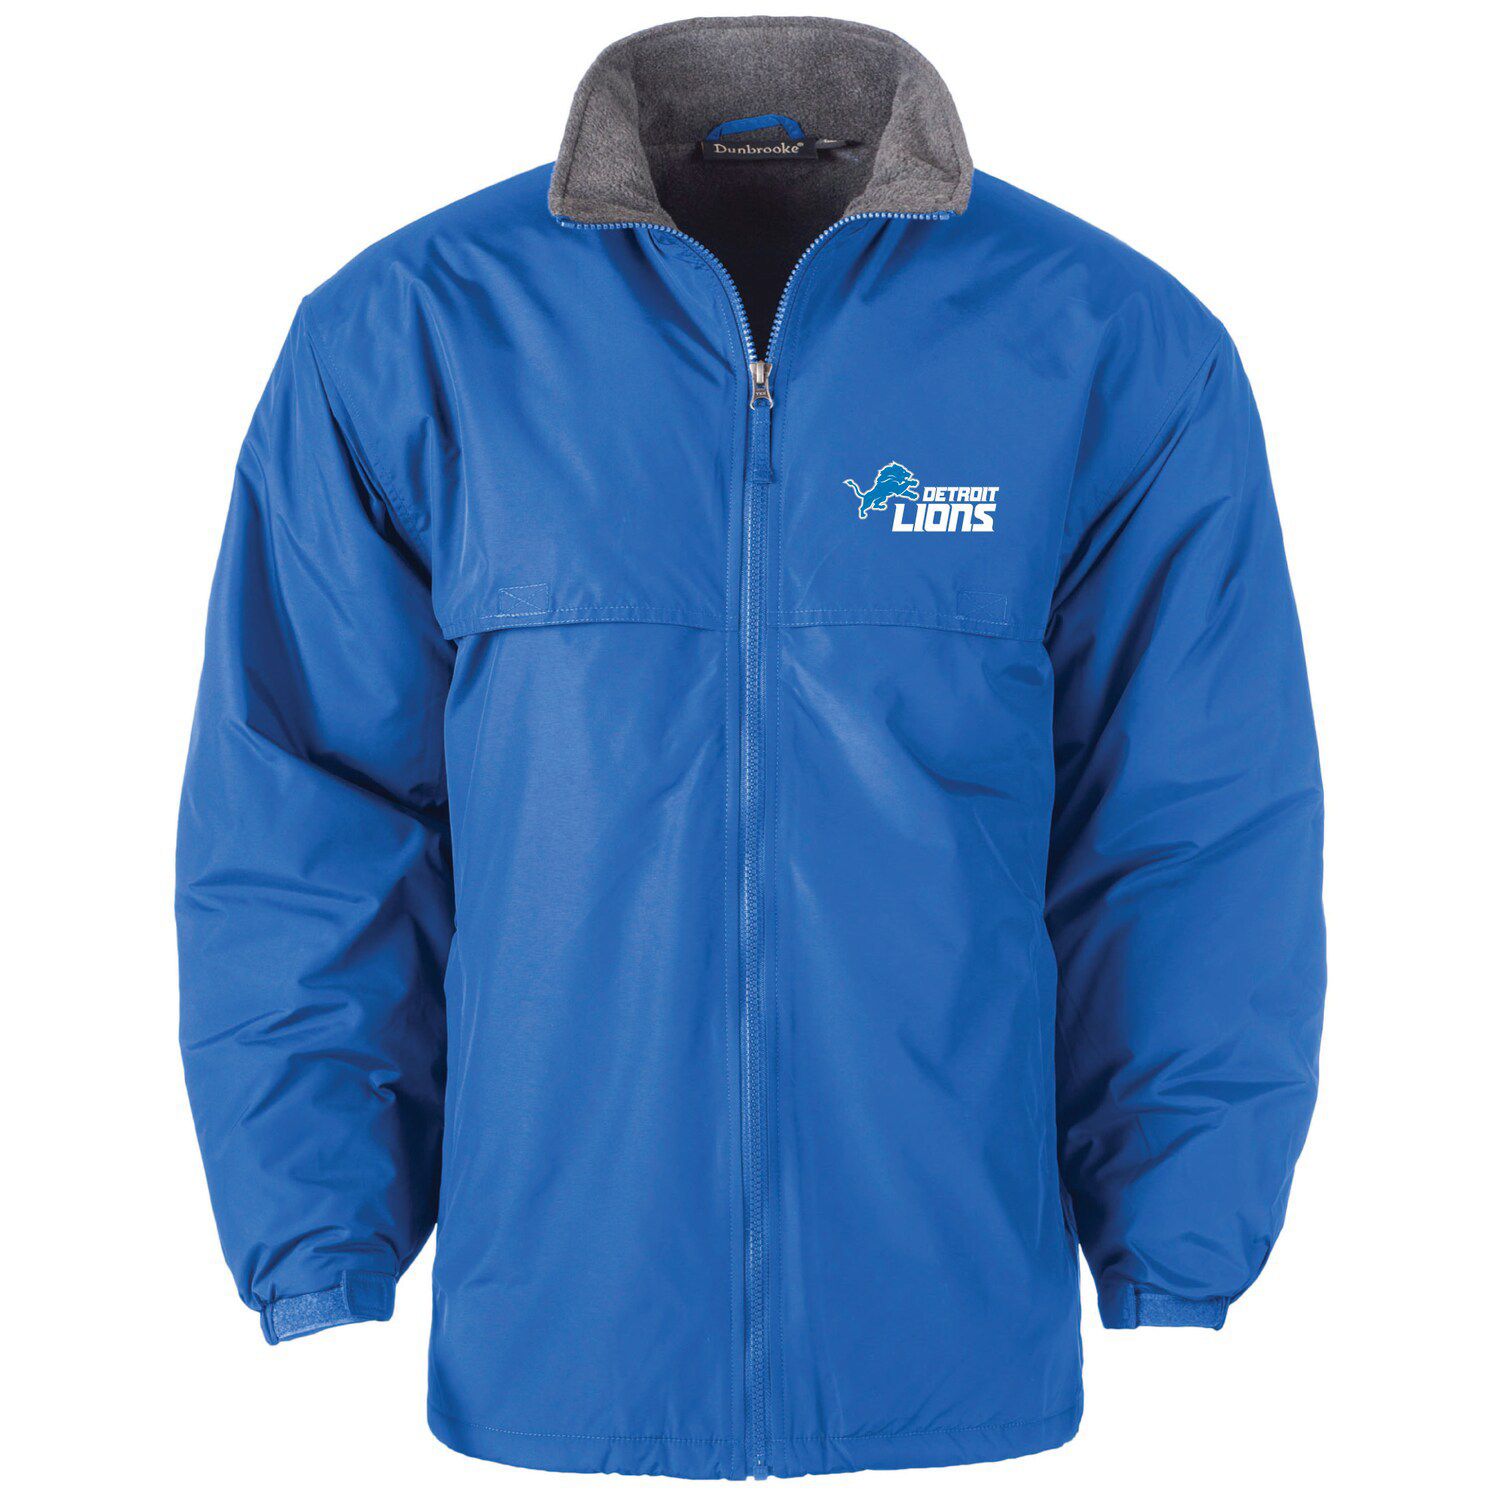 Image for Unbranded Men's Dunbrooke Blue Detroit Lions Triumph Fleece Full-Zip Jacket at Kohl's.